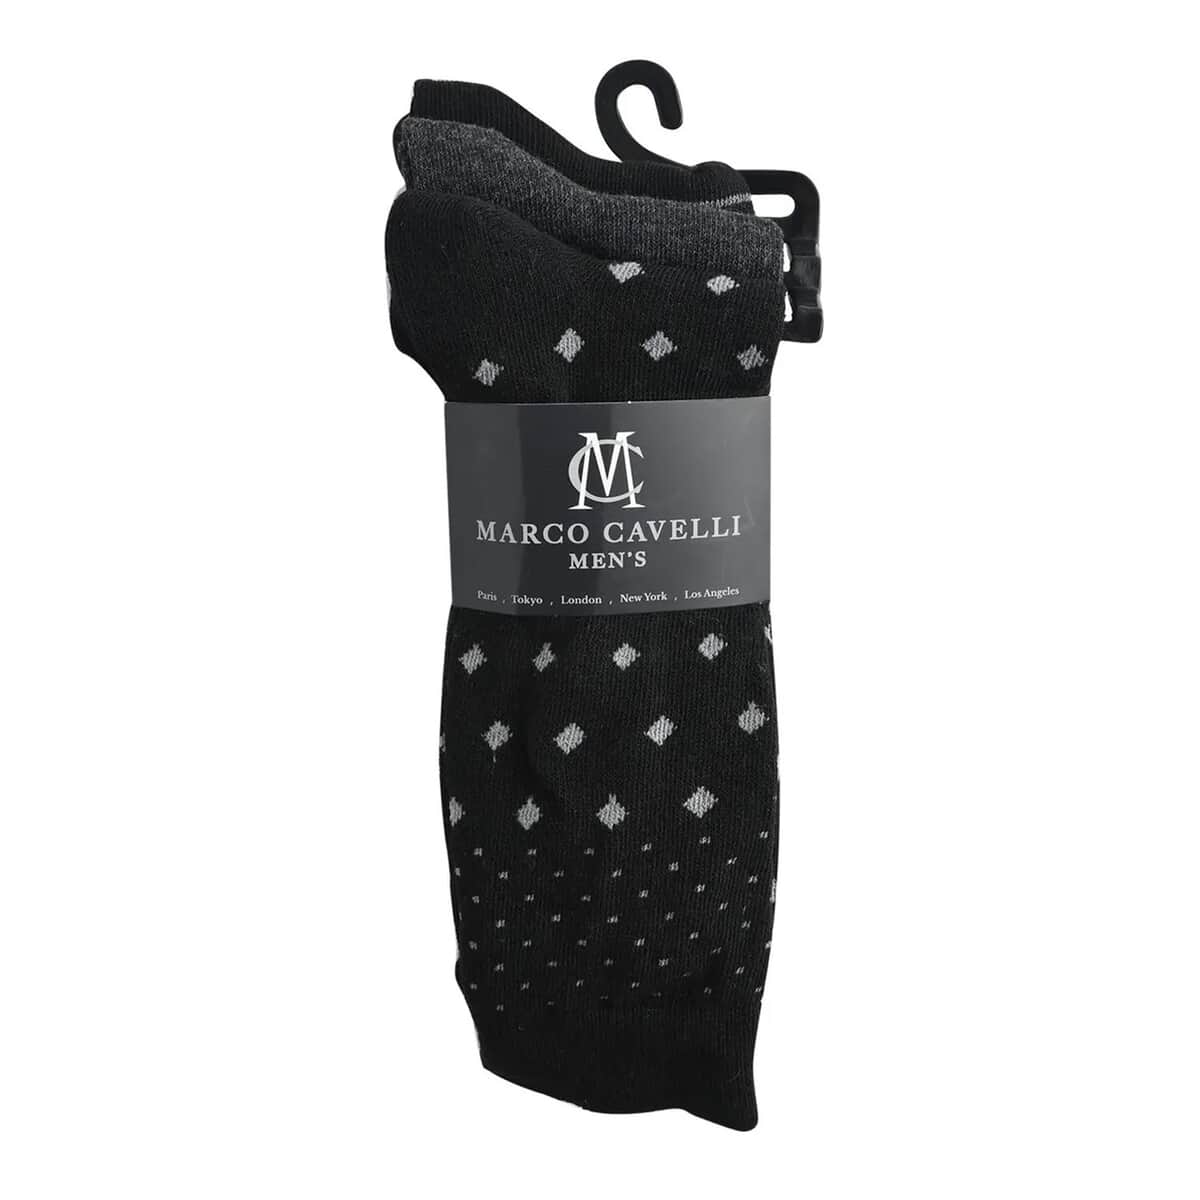 Buy Marco Cavelli Men's 3pck Dress Socks -Black/Gray (Sizes 7-12) at ...